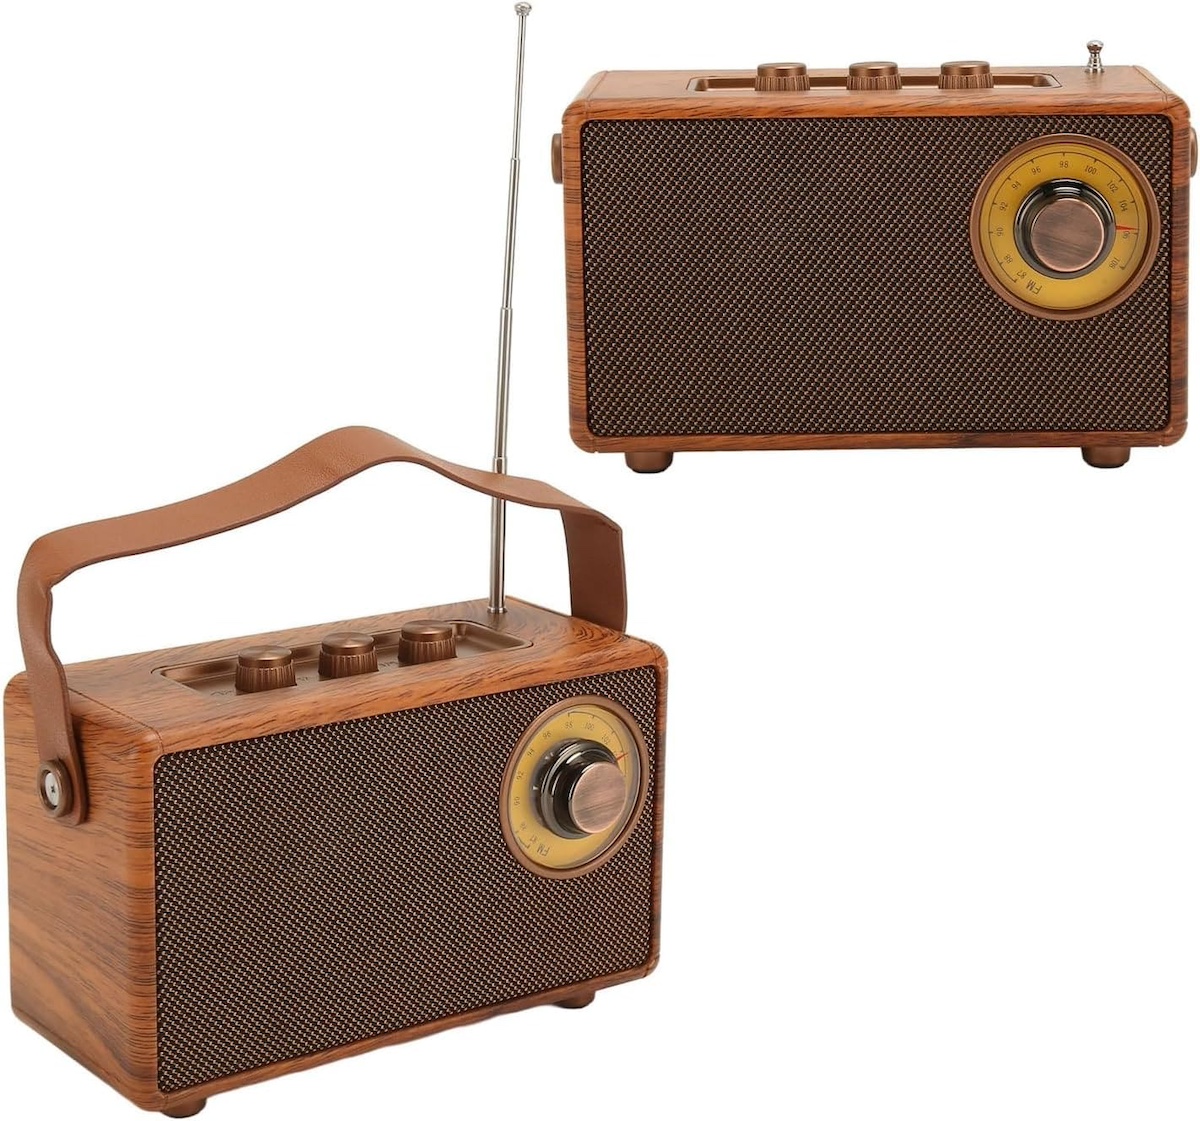 راديو صغير صغير بتصميم خشبي عتيق